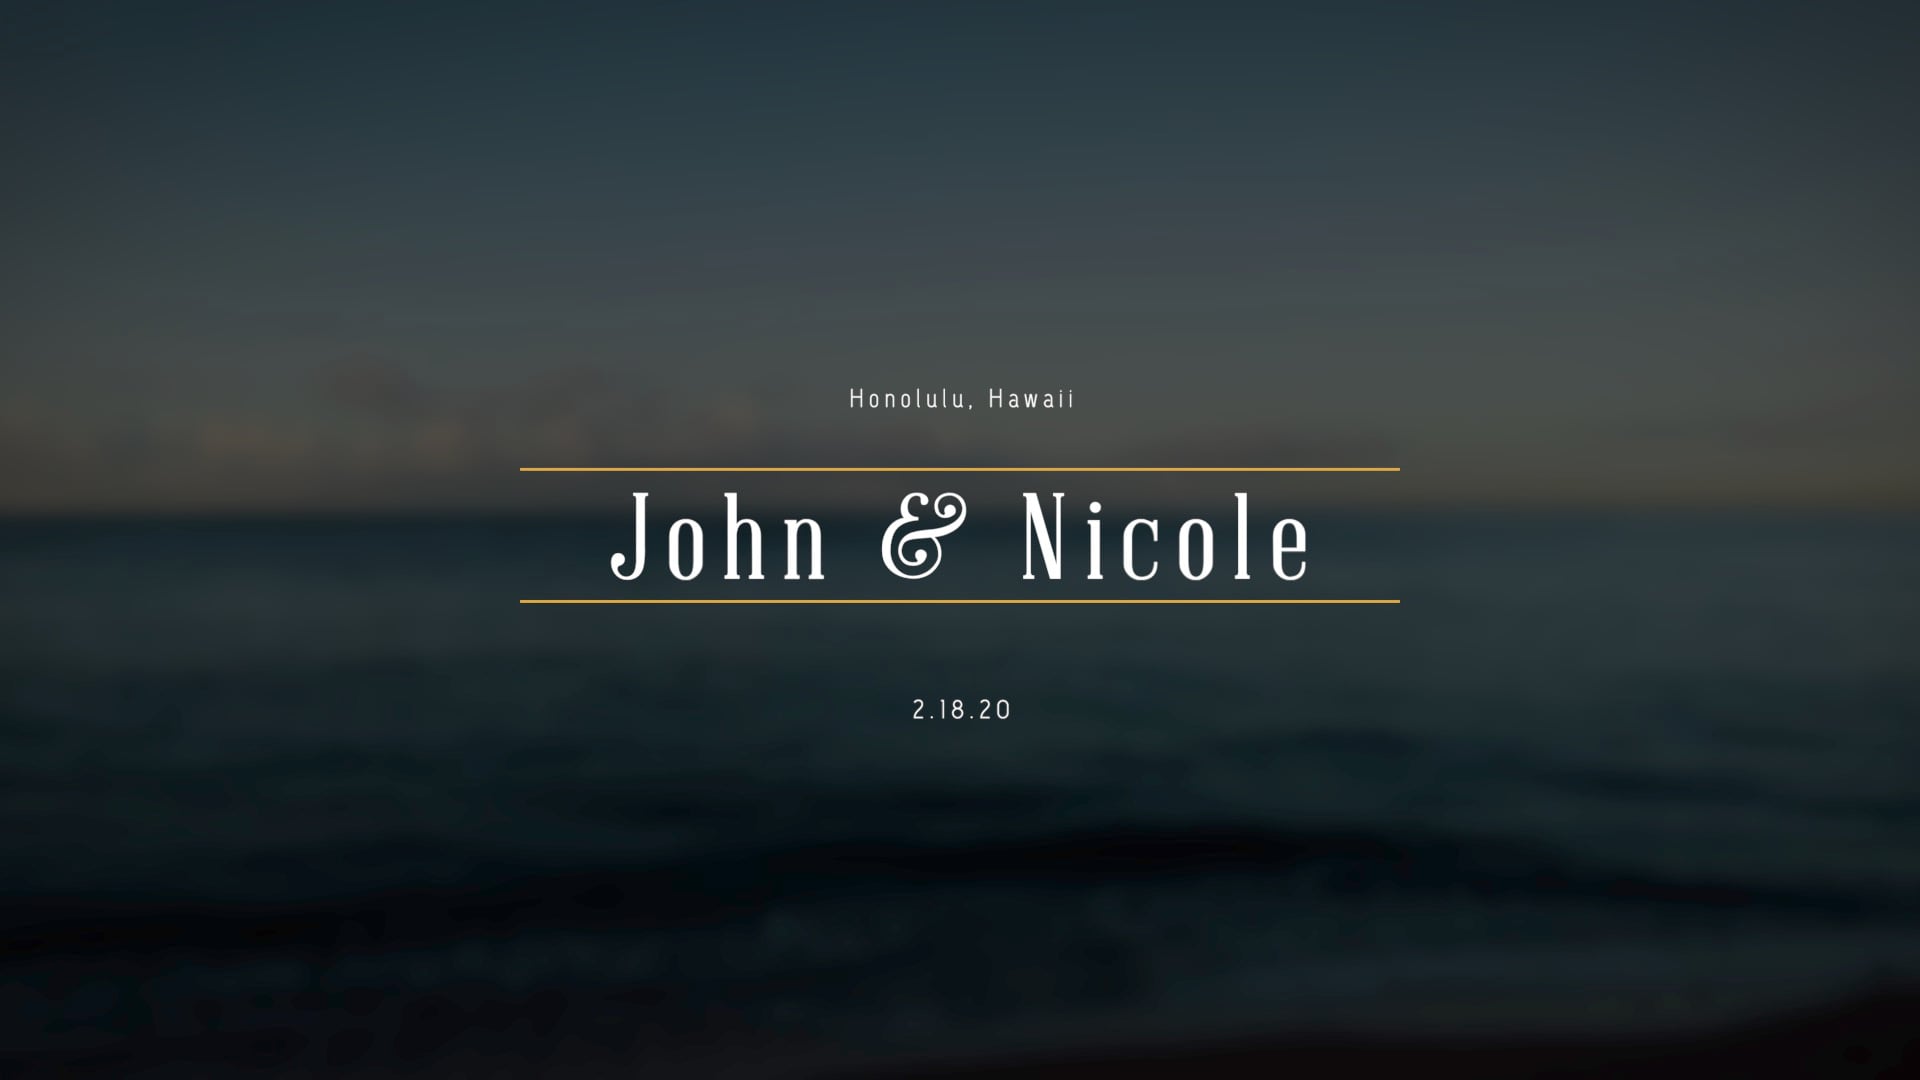 John & Nicole